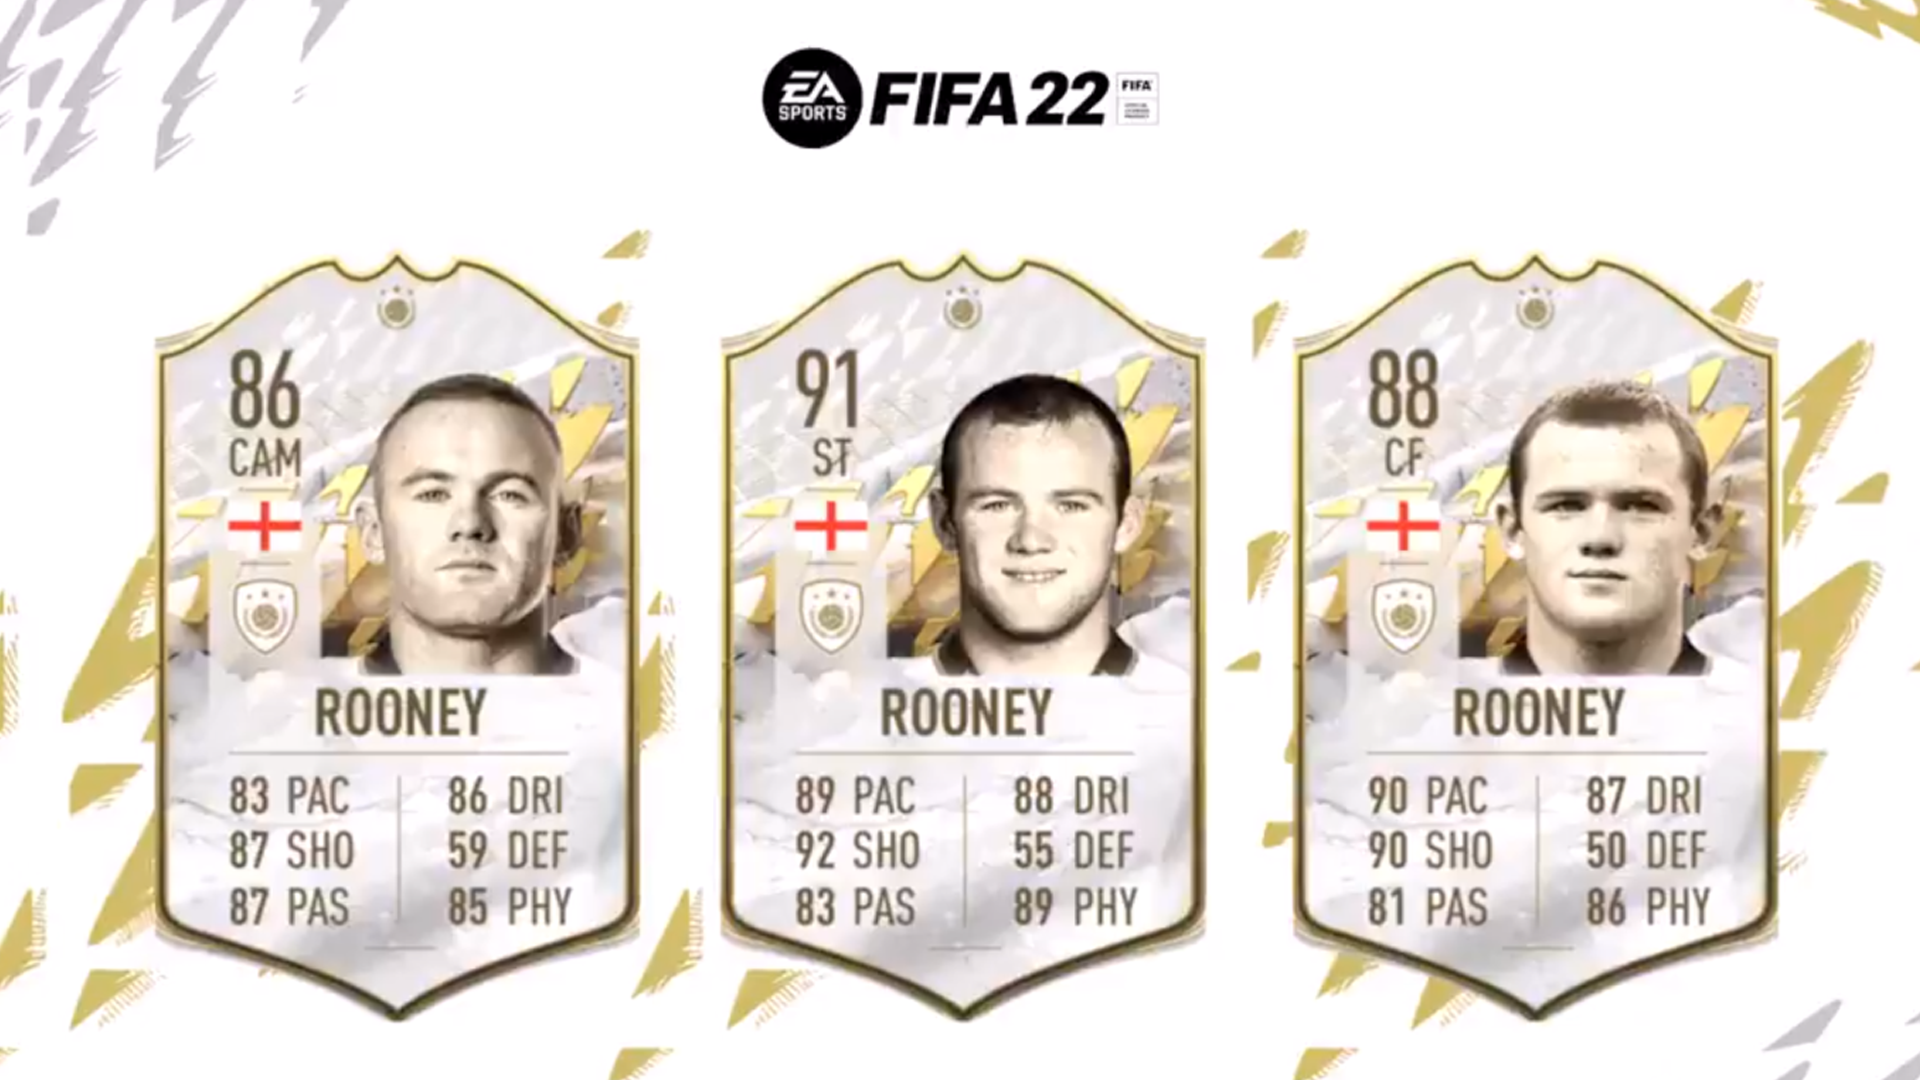 Wayne Rooney in FIFA 22